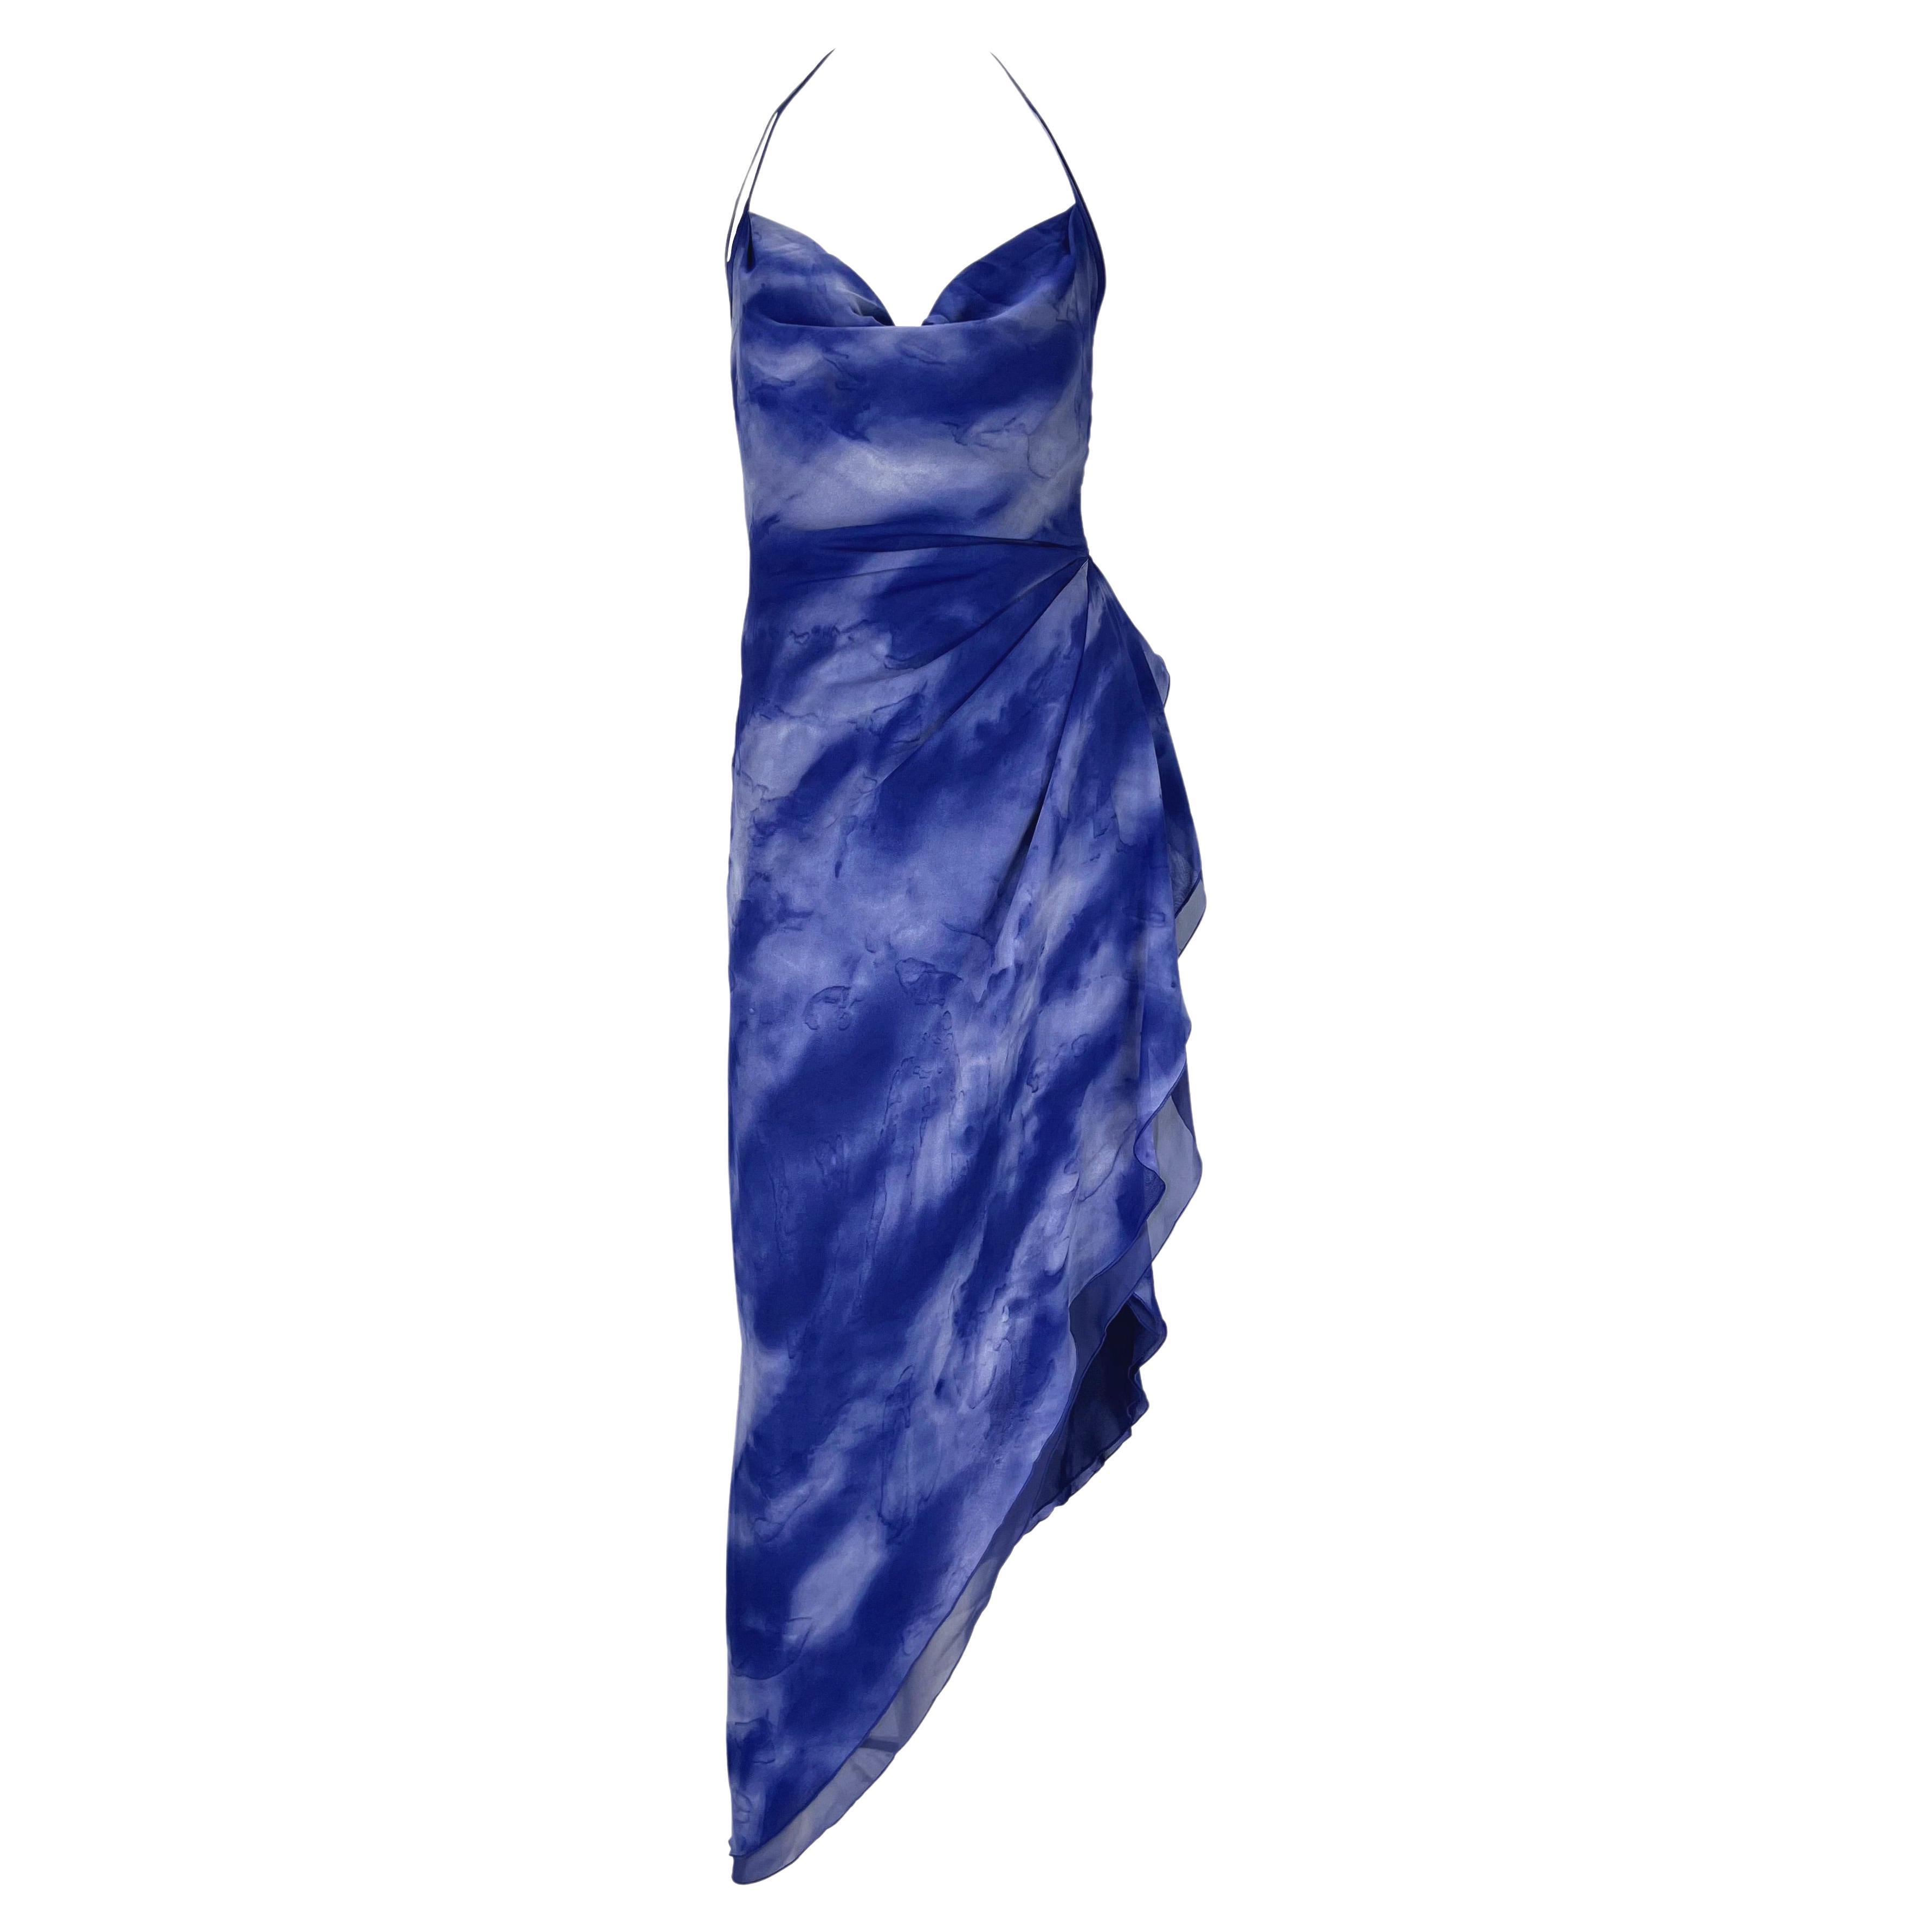 F/W 2000 Emanuel Ungaro Runway Ad Blue Watercolor Silk Chiffon Dress Y2K